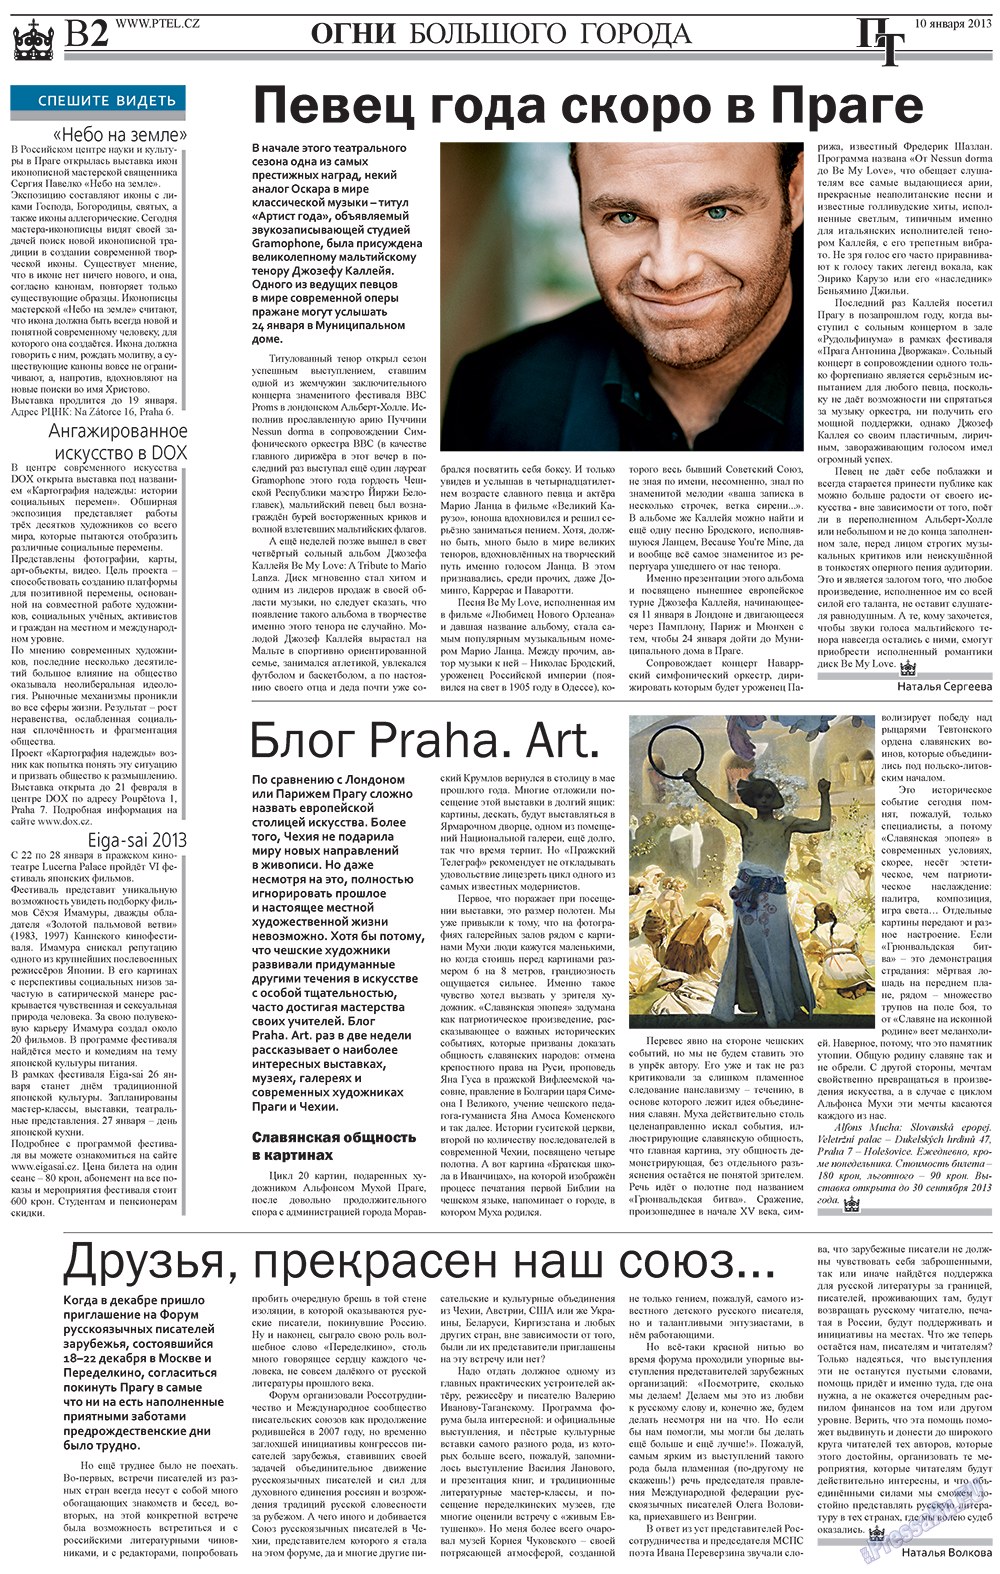 Пражский телеграф, газета. 2013 №1 стр.10